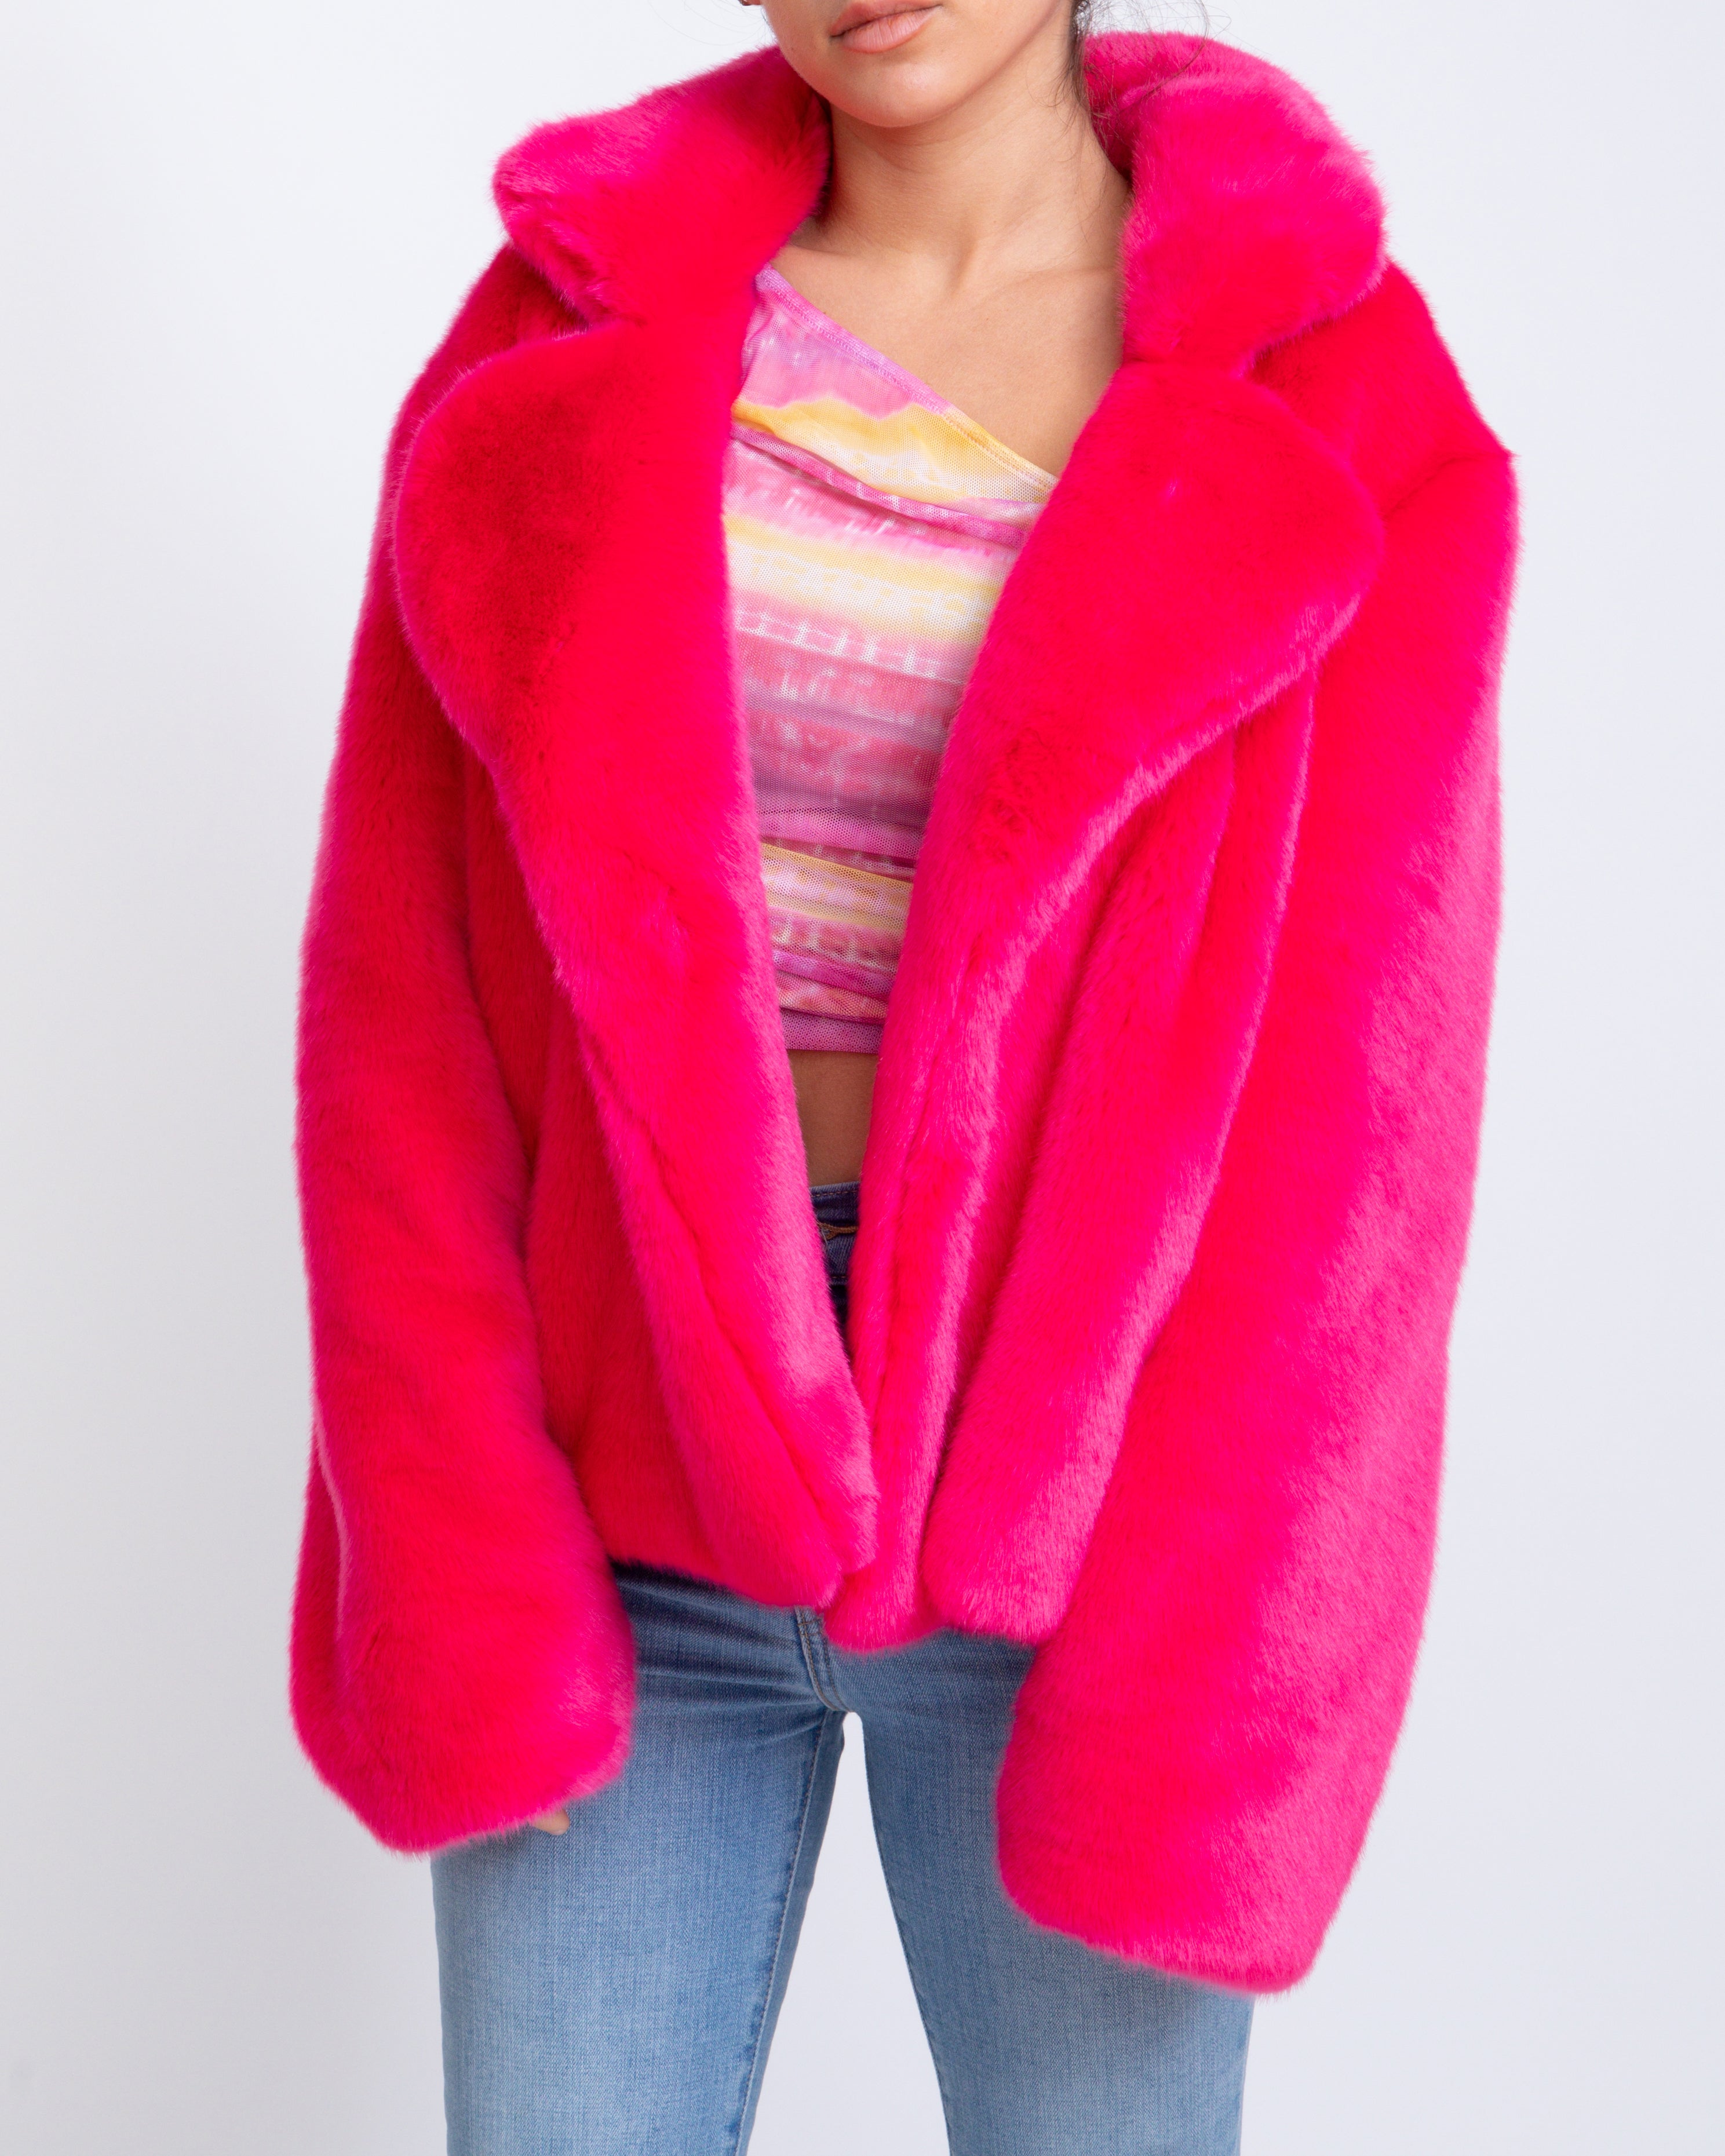 Hot pink Faux Fur Jacket